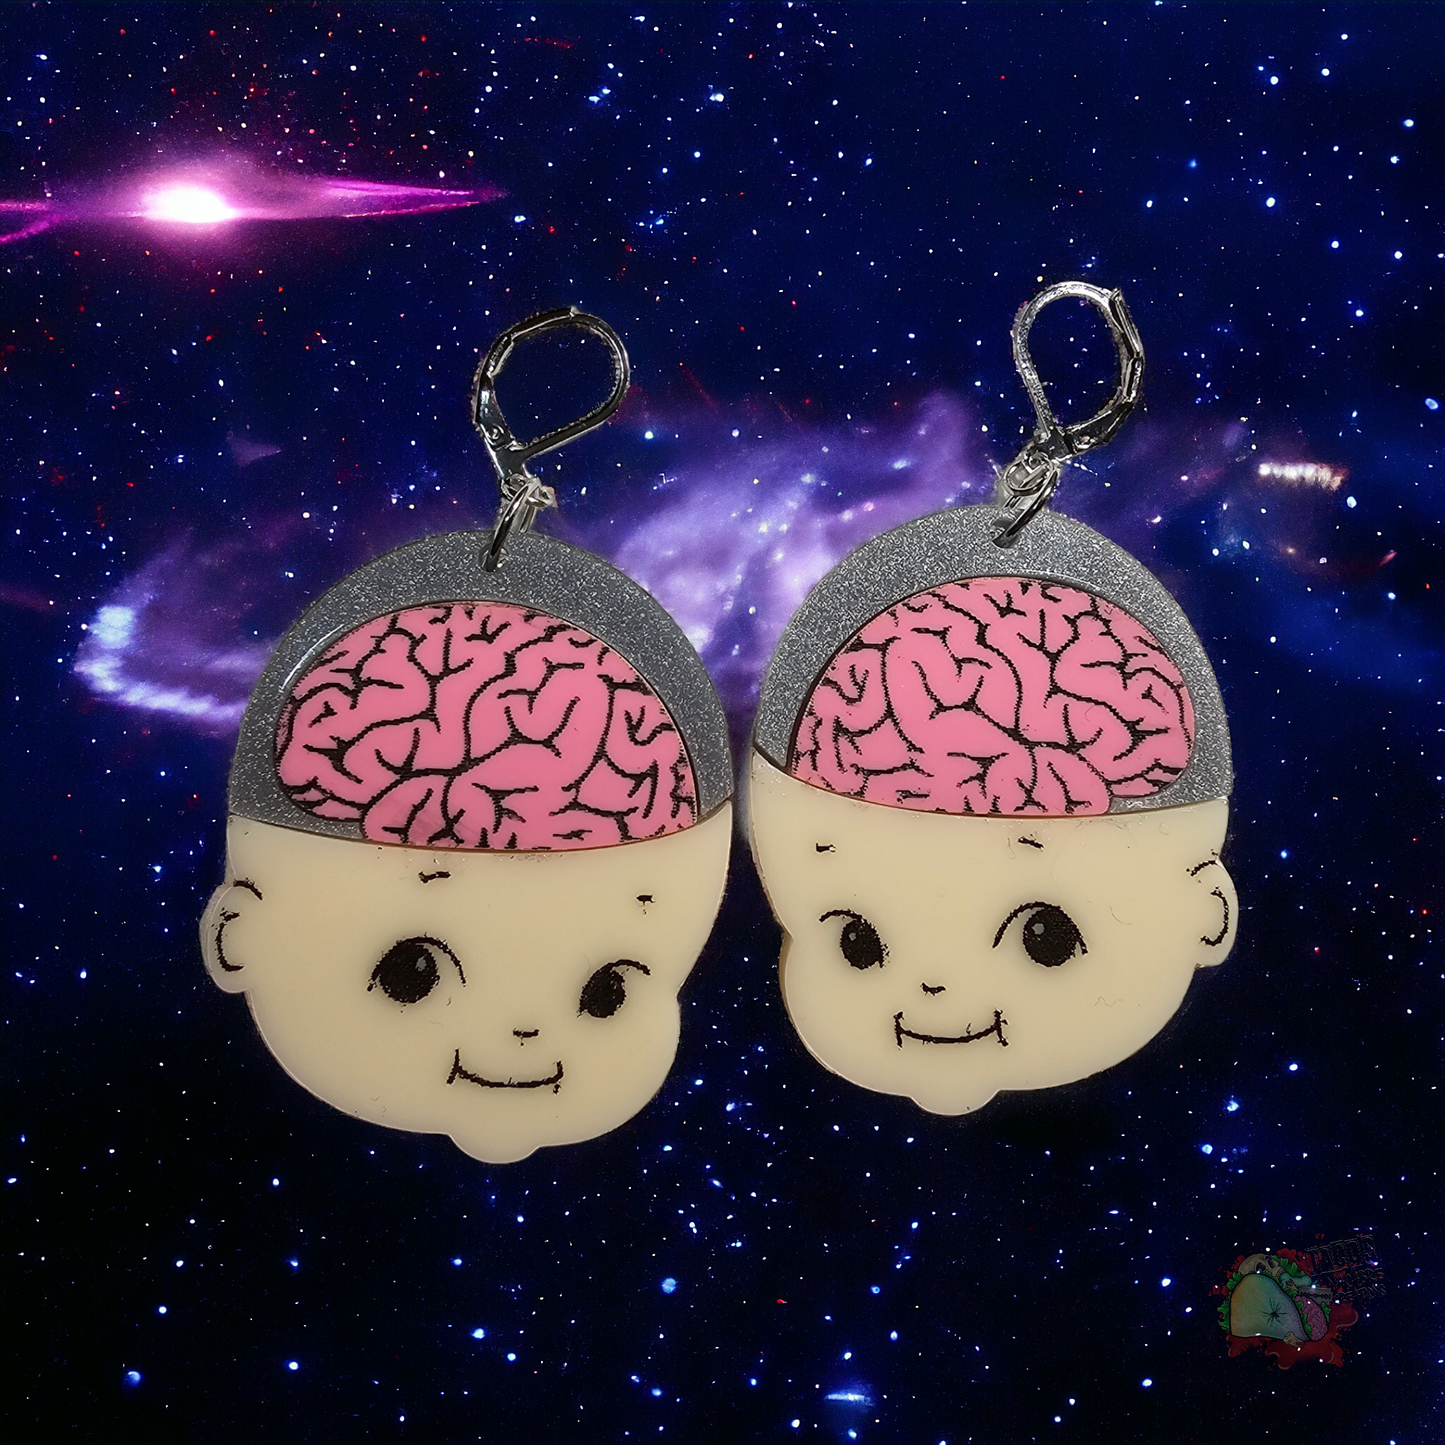 Space baby brain